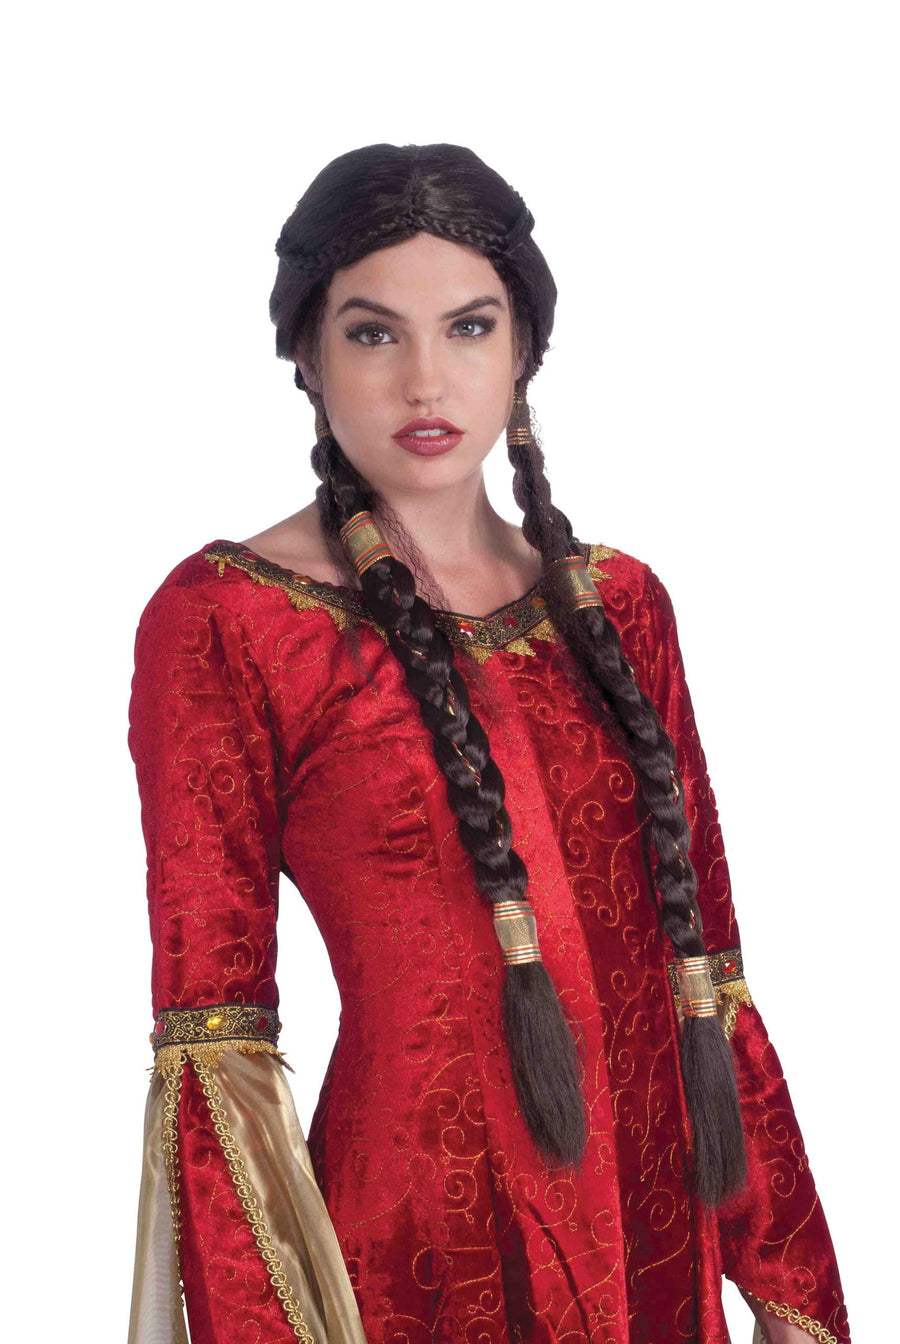 Womens Medieval Maiden Wigs Female Halloween Costume_1